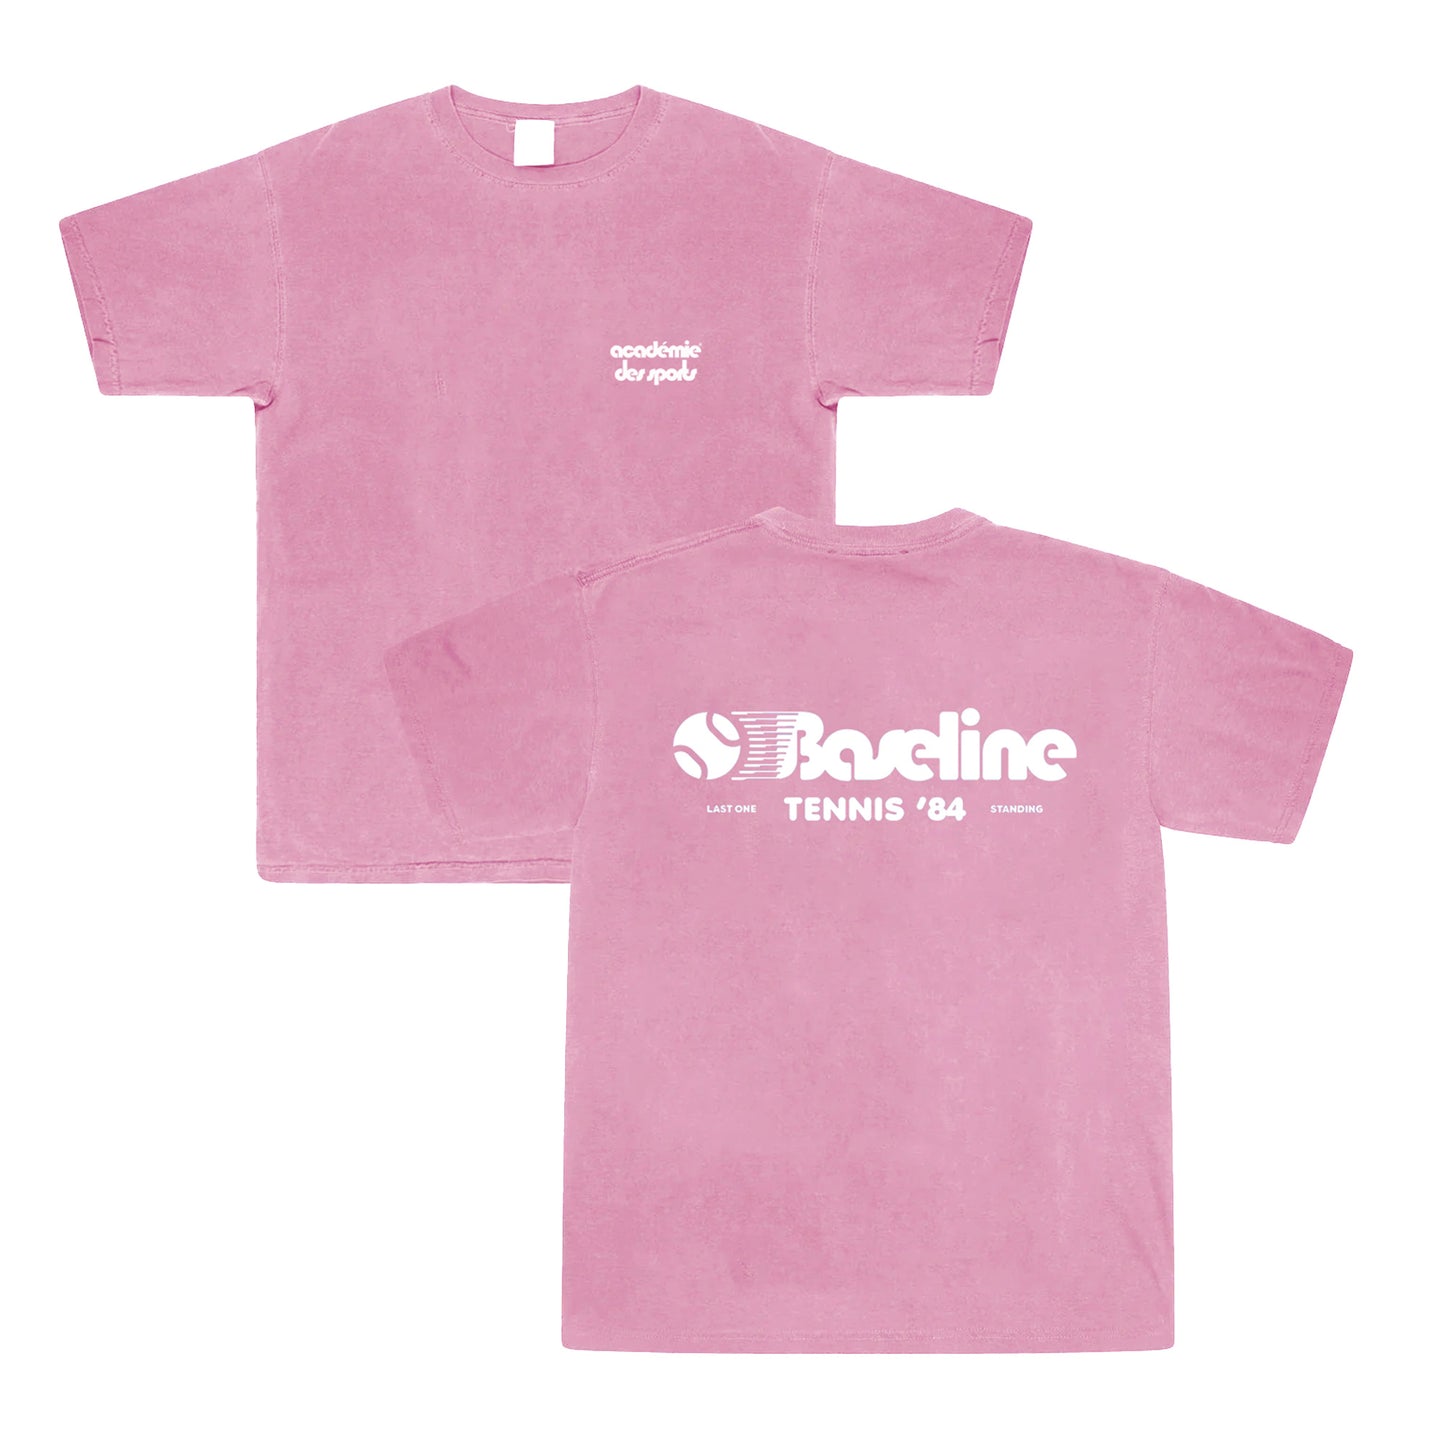 Vice 84 *10 Years Of* 'Baseline' Tee - Vintage Washed Pink